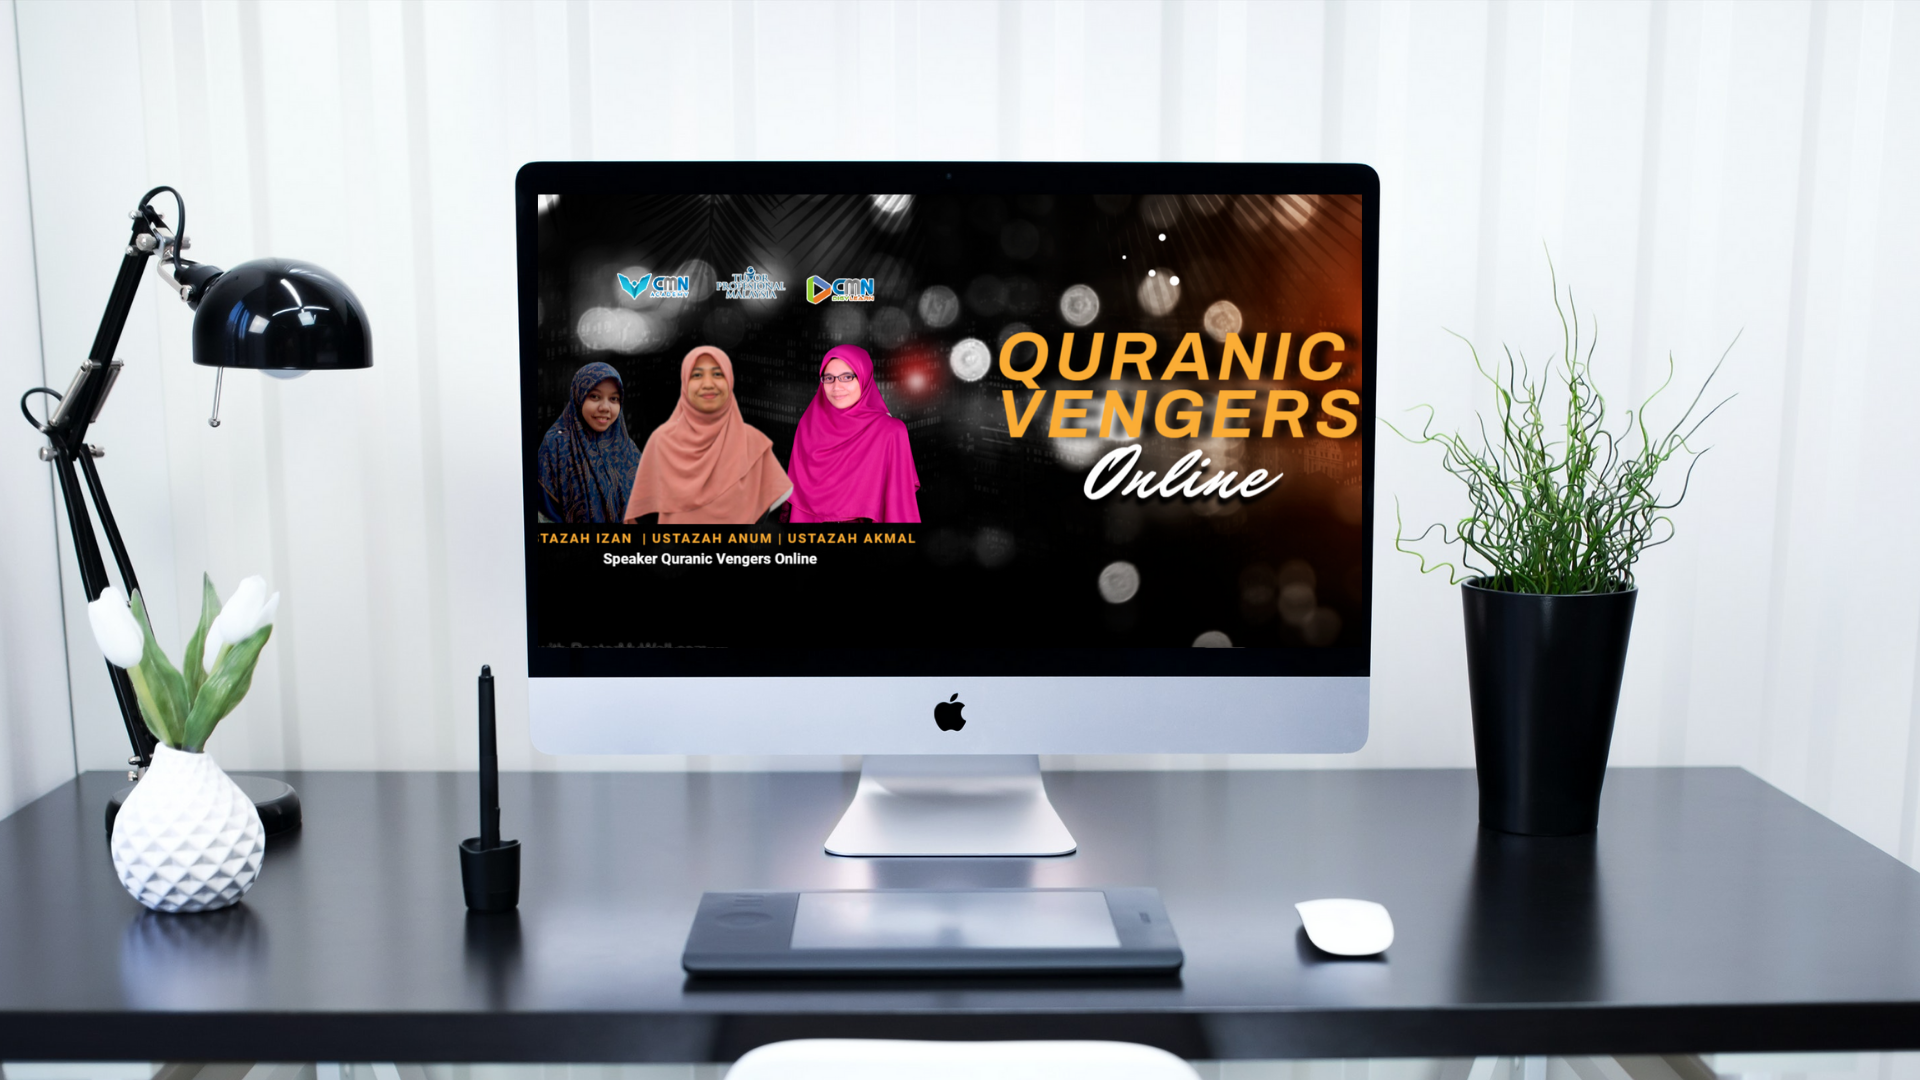 Quranic Vengers Online